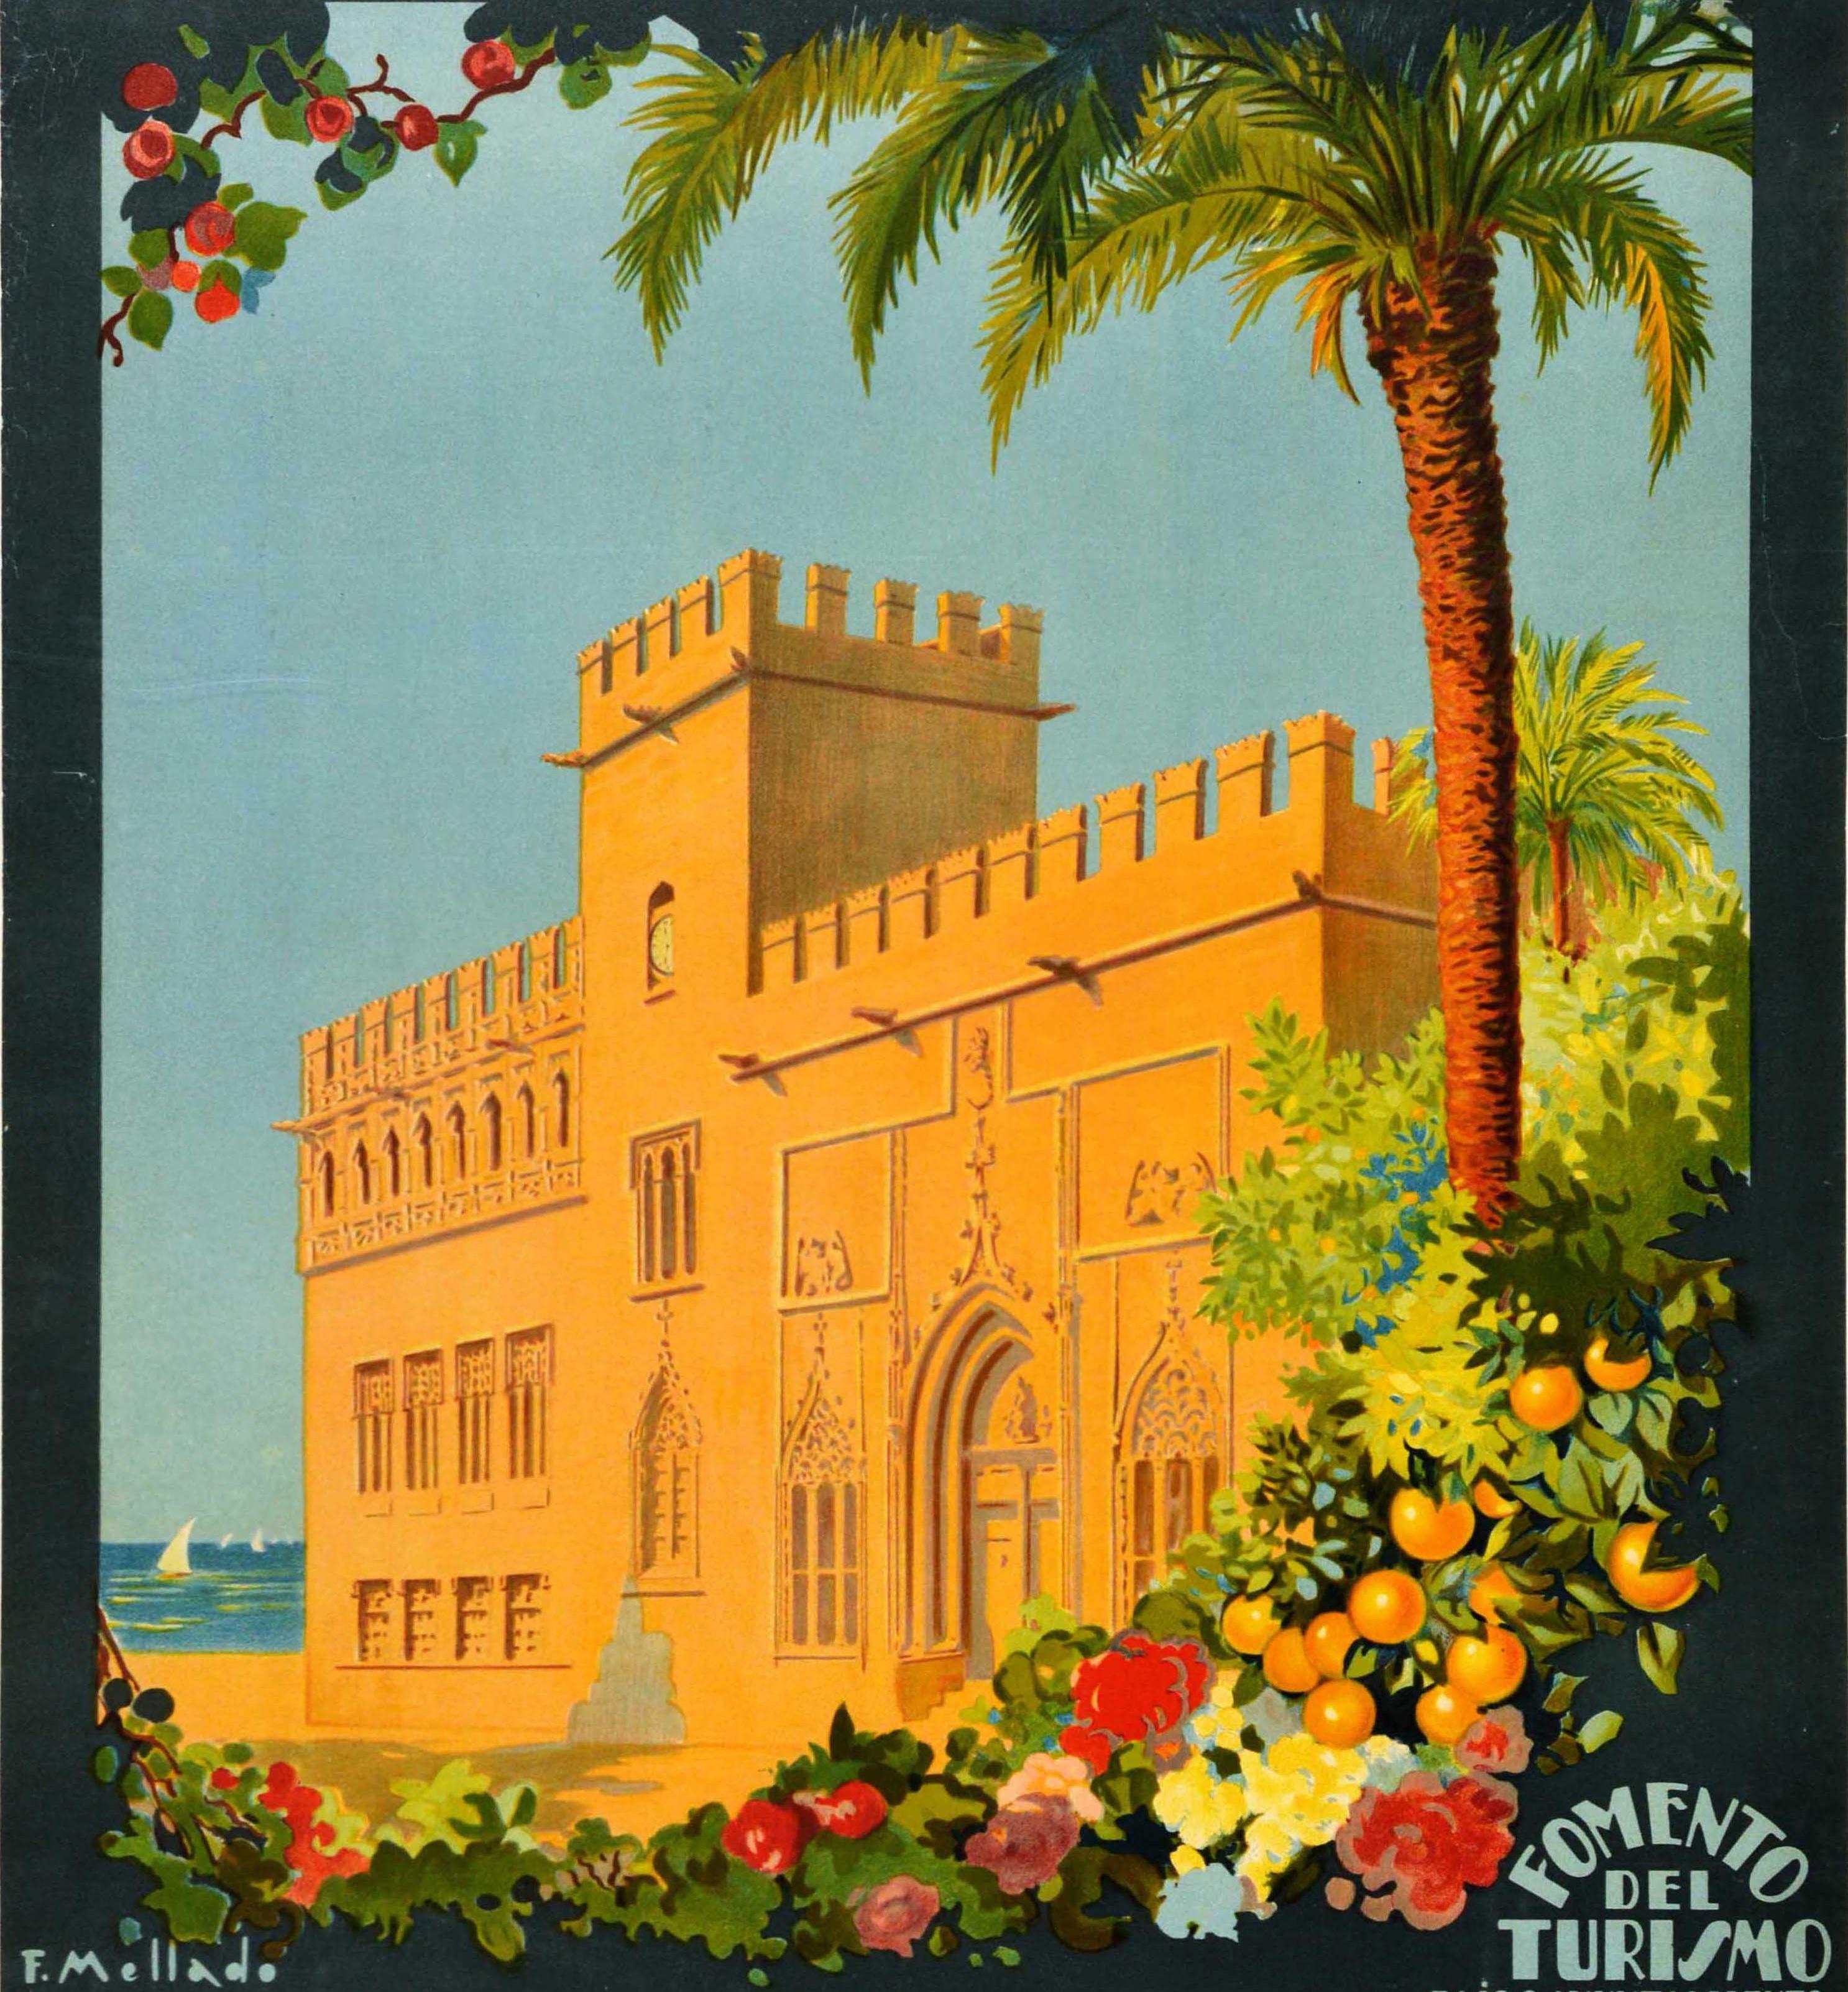 Mid-20th Century Original Vintage Spanish Travel Poster Valencia Nature Sovereign History Sailing